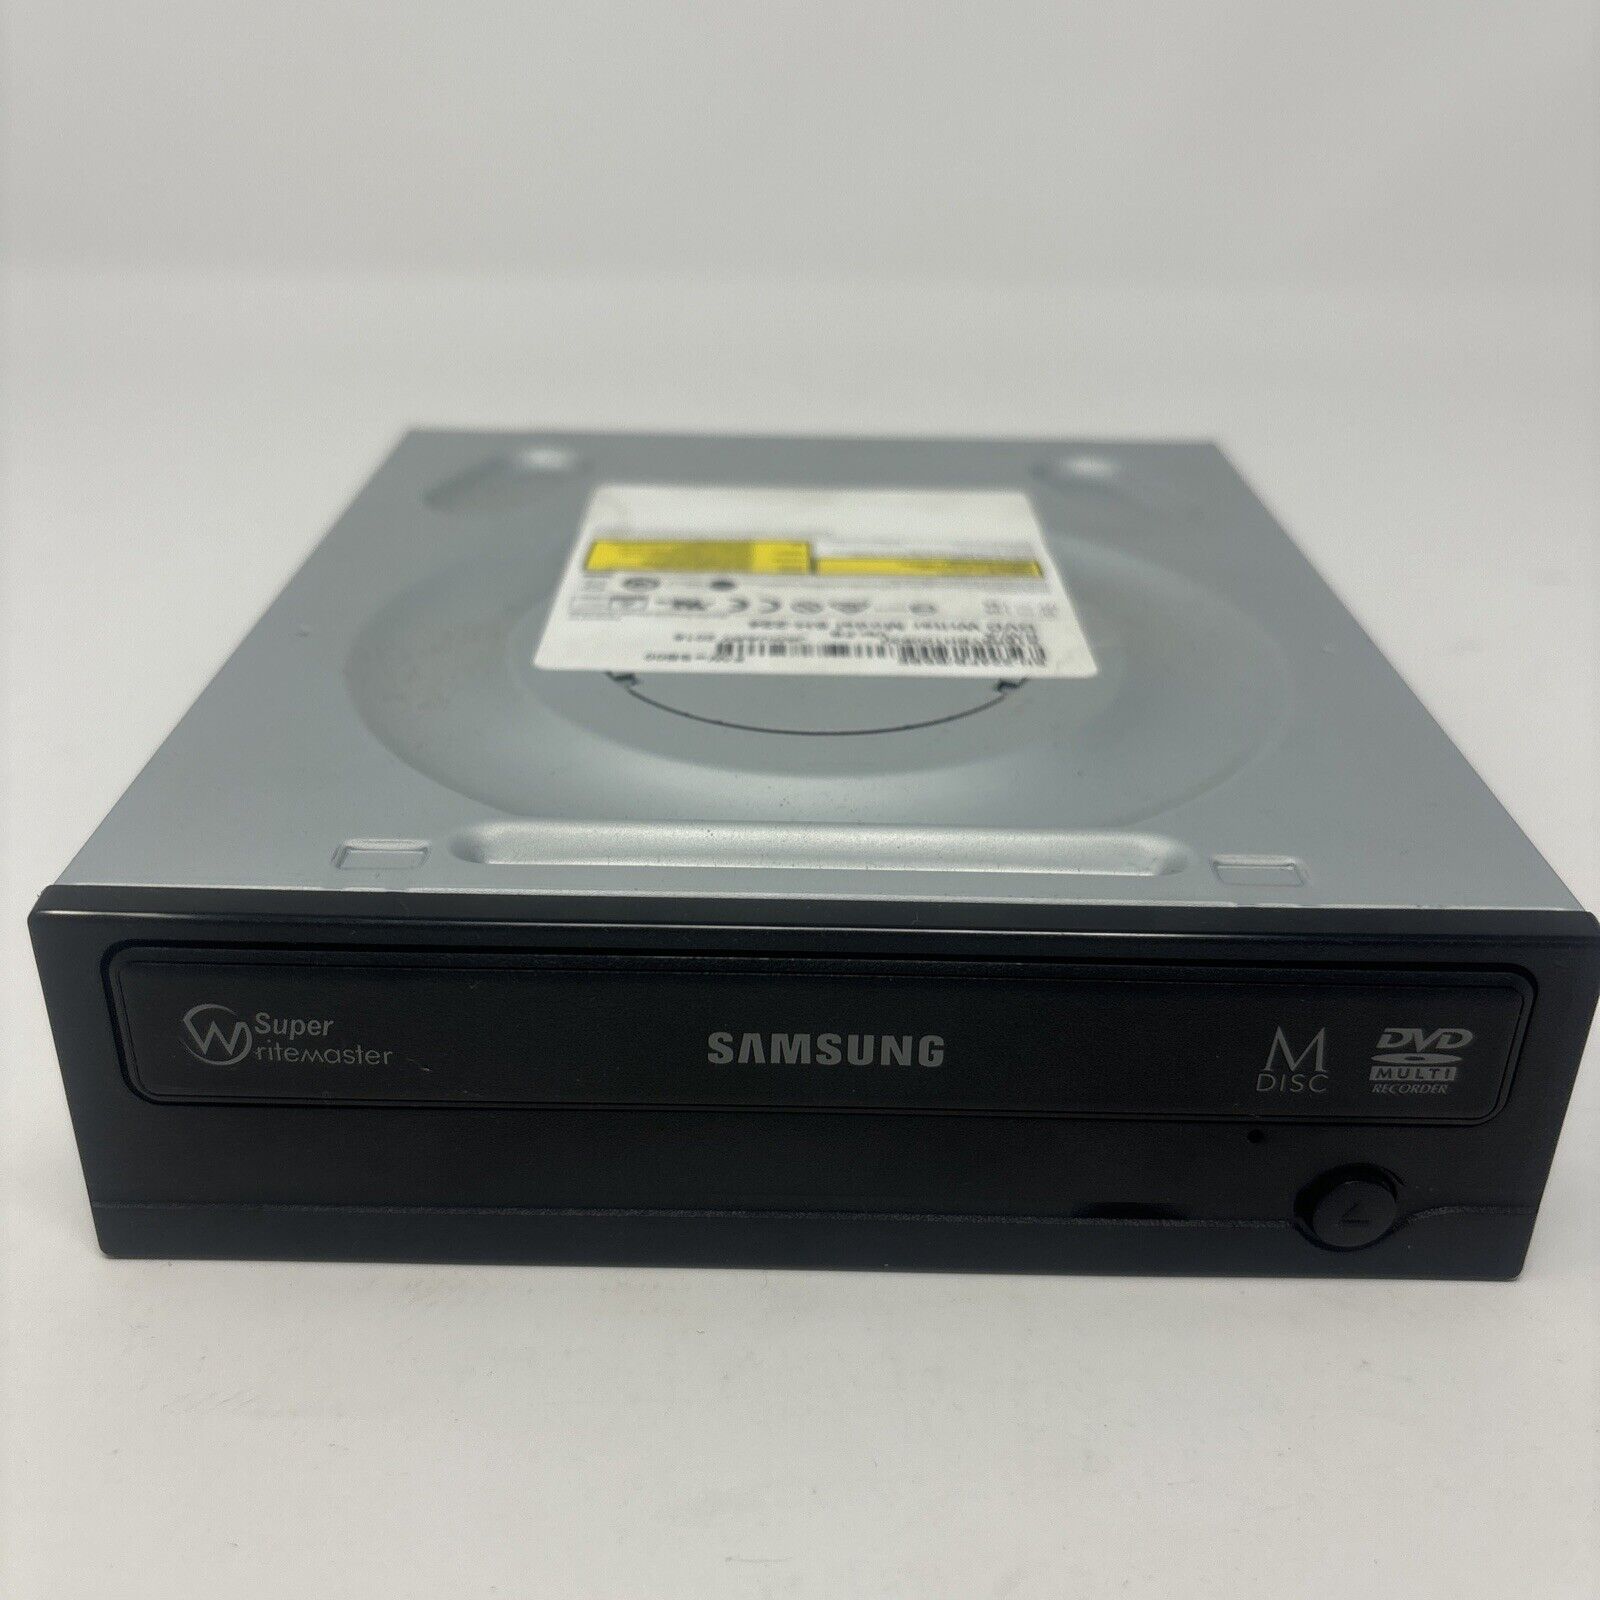 Samsung Toshiba SH-224DB/BEBE DVD Writer Model SH-224